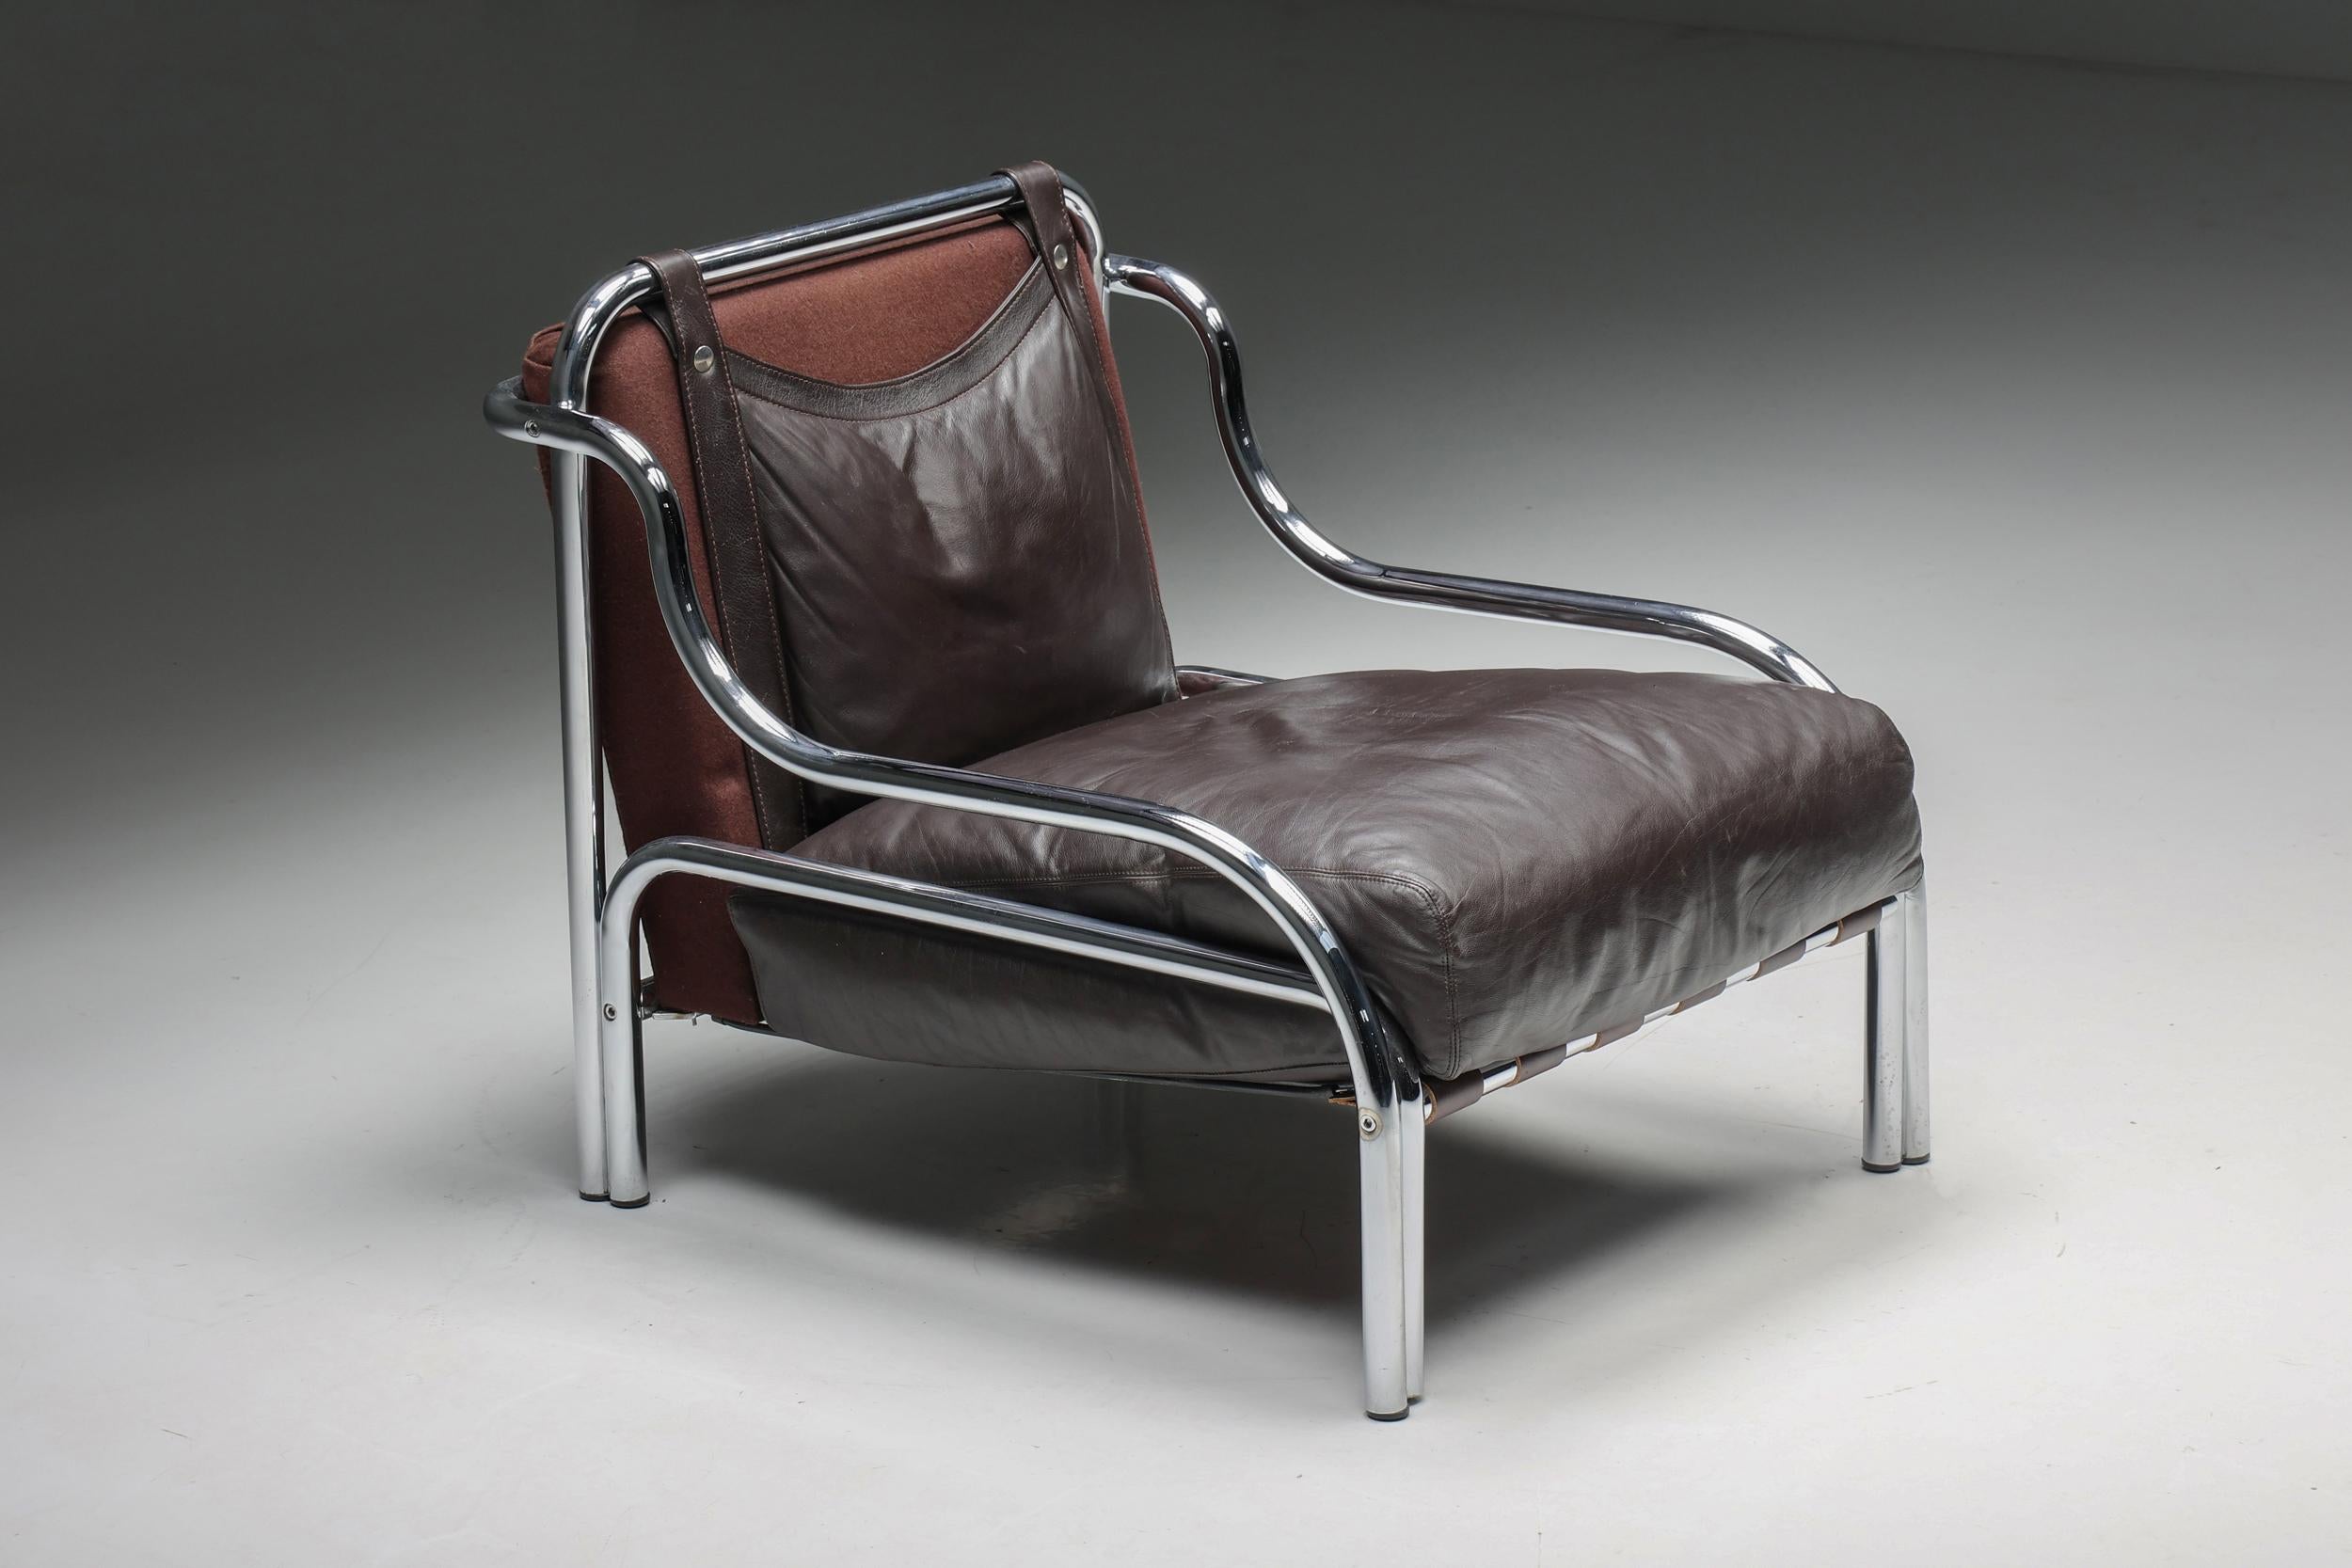 Gae Aulenti; Poltranova; Stringa Sofa; Chair; Lounge Chair; Armchair; Chromed Metal; Burgundy Leather Italy; 1962; Settee; Italian Design; Italy;

Gae Aulenti for Poltranova, easy chairs 'Stringa', chromed metal, burgundy leather, Italy, 1962.